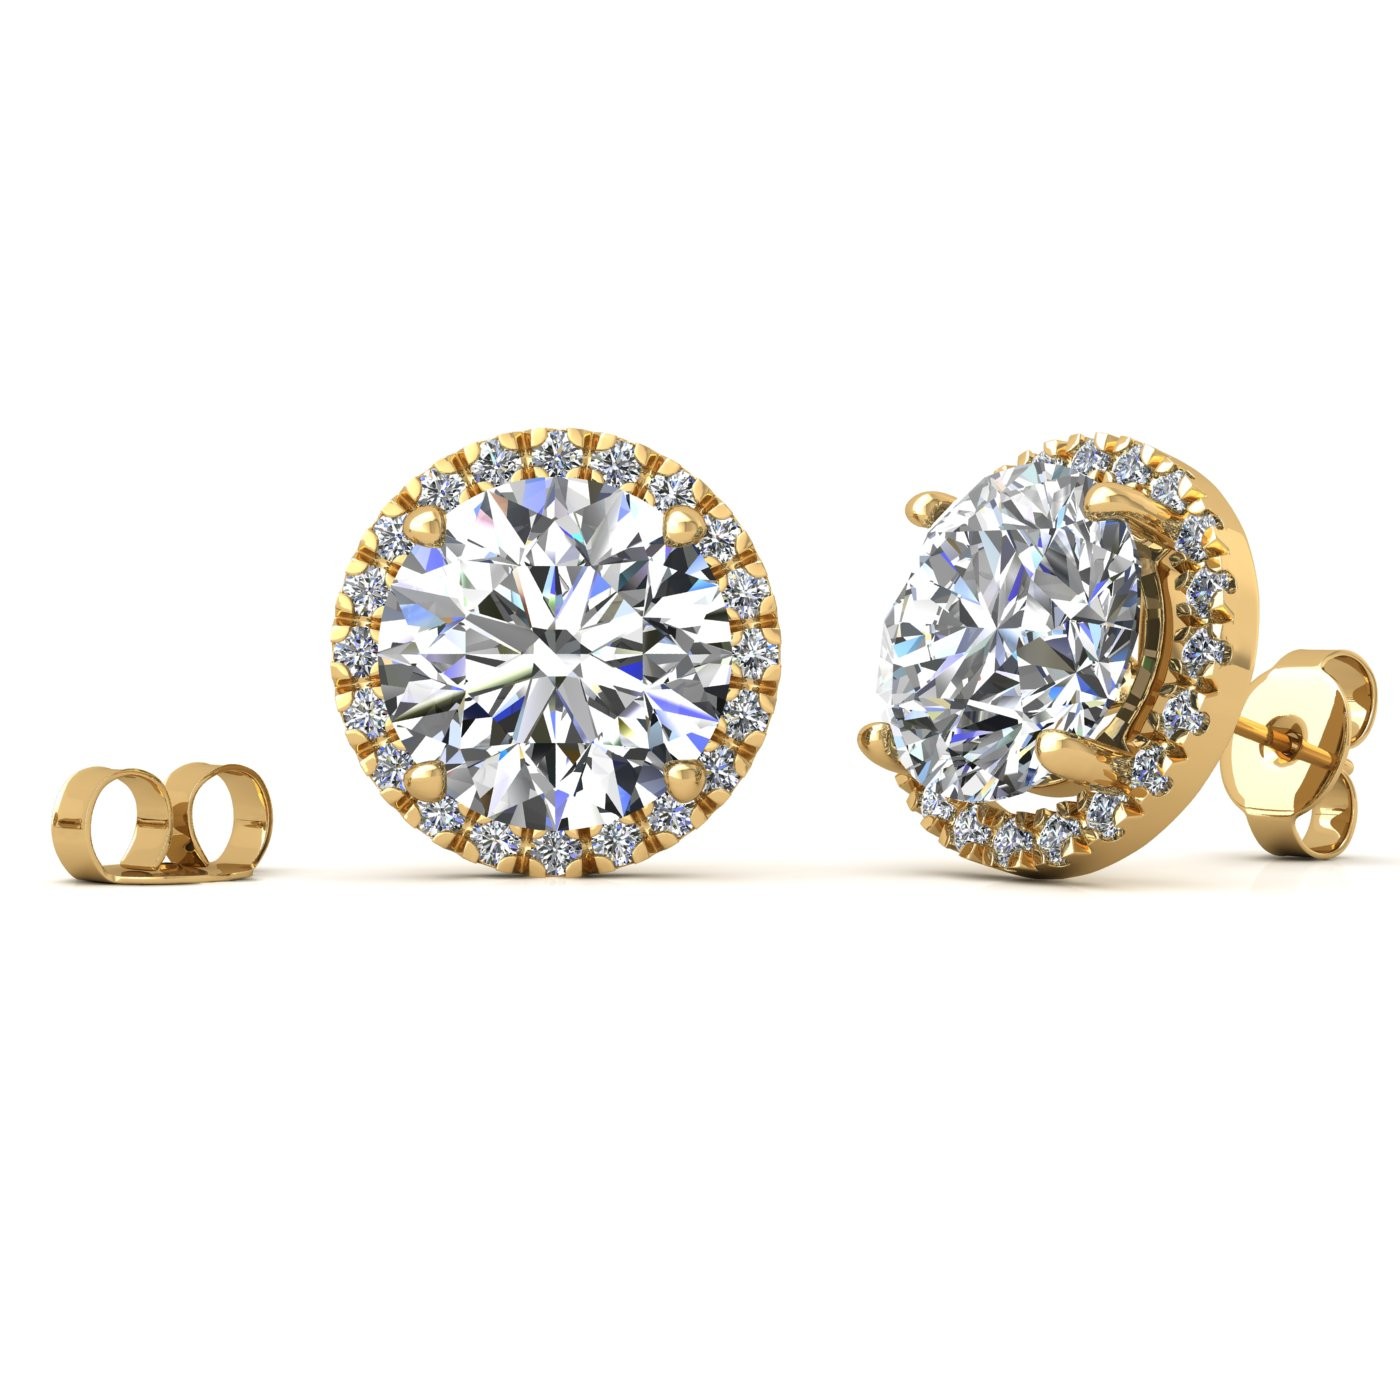 18k yellow gold  1 ct each (2,0 tcw) 4 prongs round shape diamond earrings with diamond pavÉ set halo Photos & images